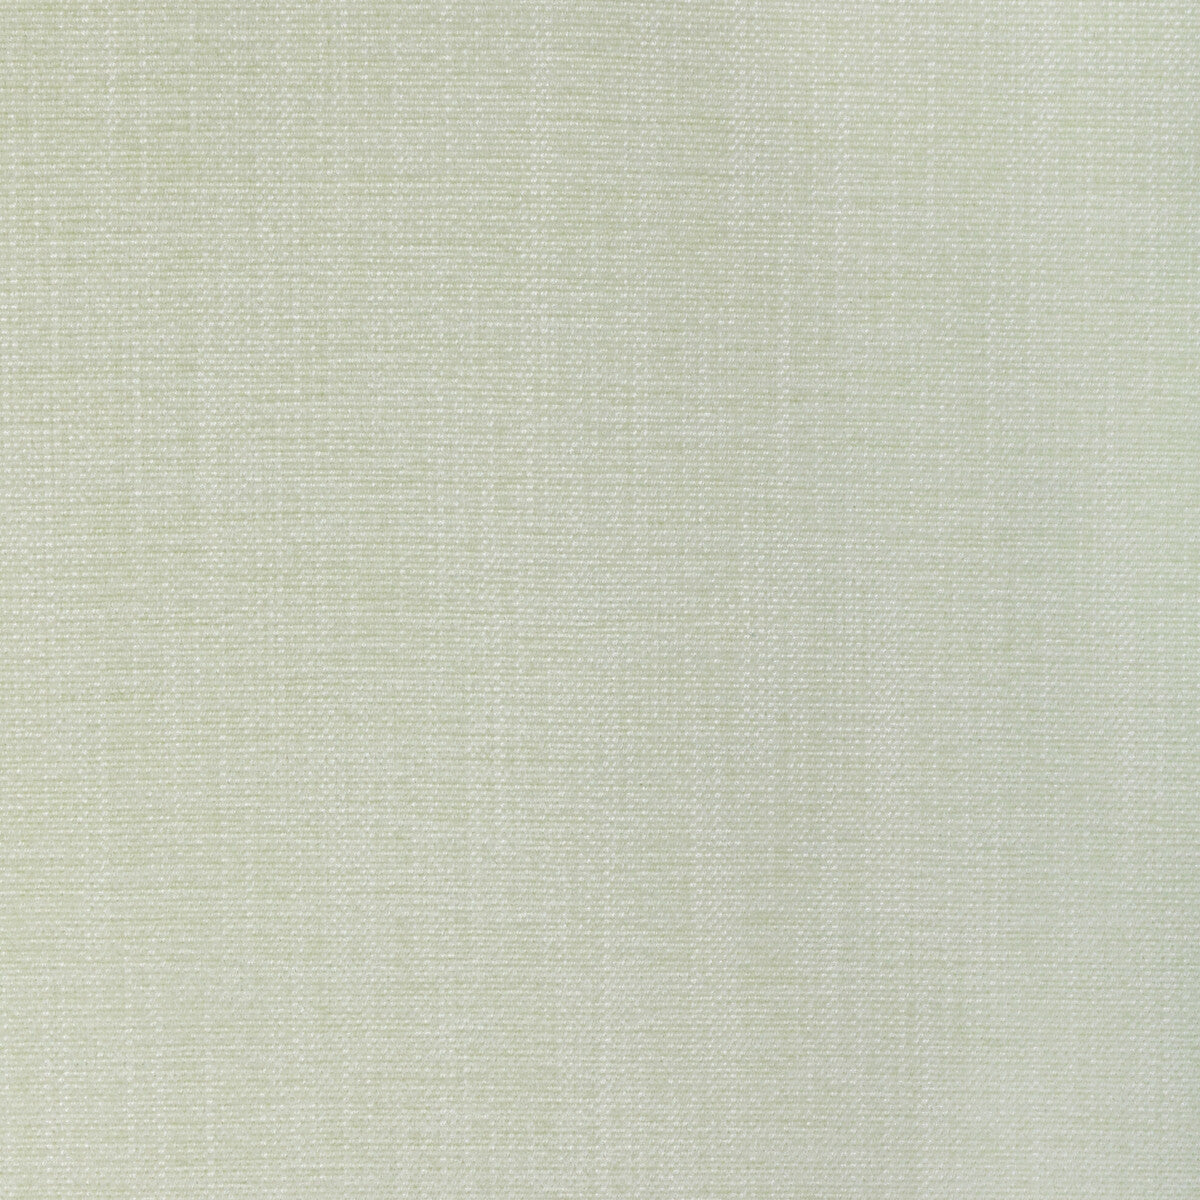 Kravet Smart fabric in 36650-1101 color - pattern 36650.1101.0 - by Kravet Smart in the Performance Kravetarmor collection